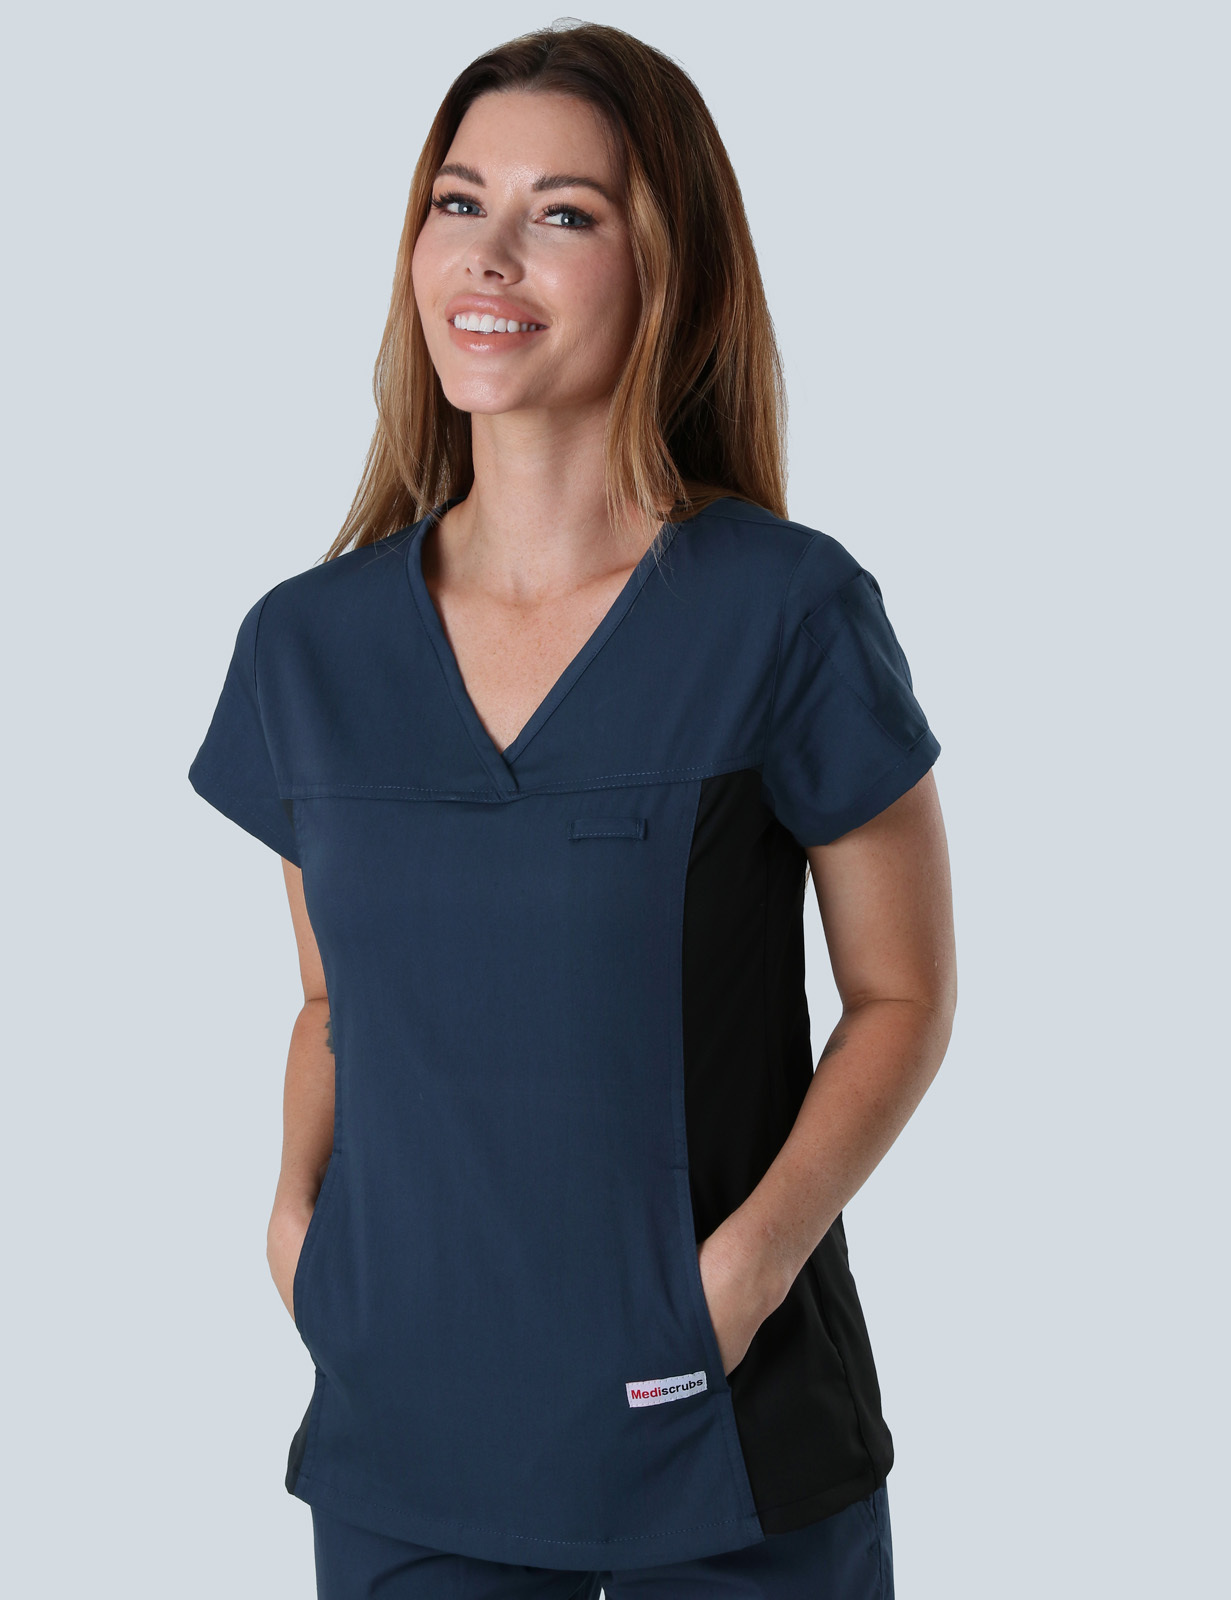 Monash Health Obstetrics  Nurse Uniform Set Bundle (Women's Fit Spandex Top and Cargo Pants in Navy + Logo)